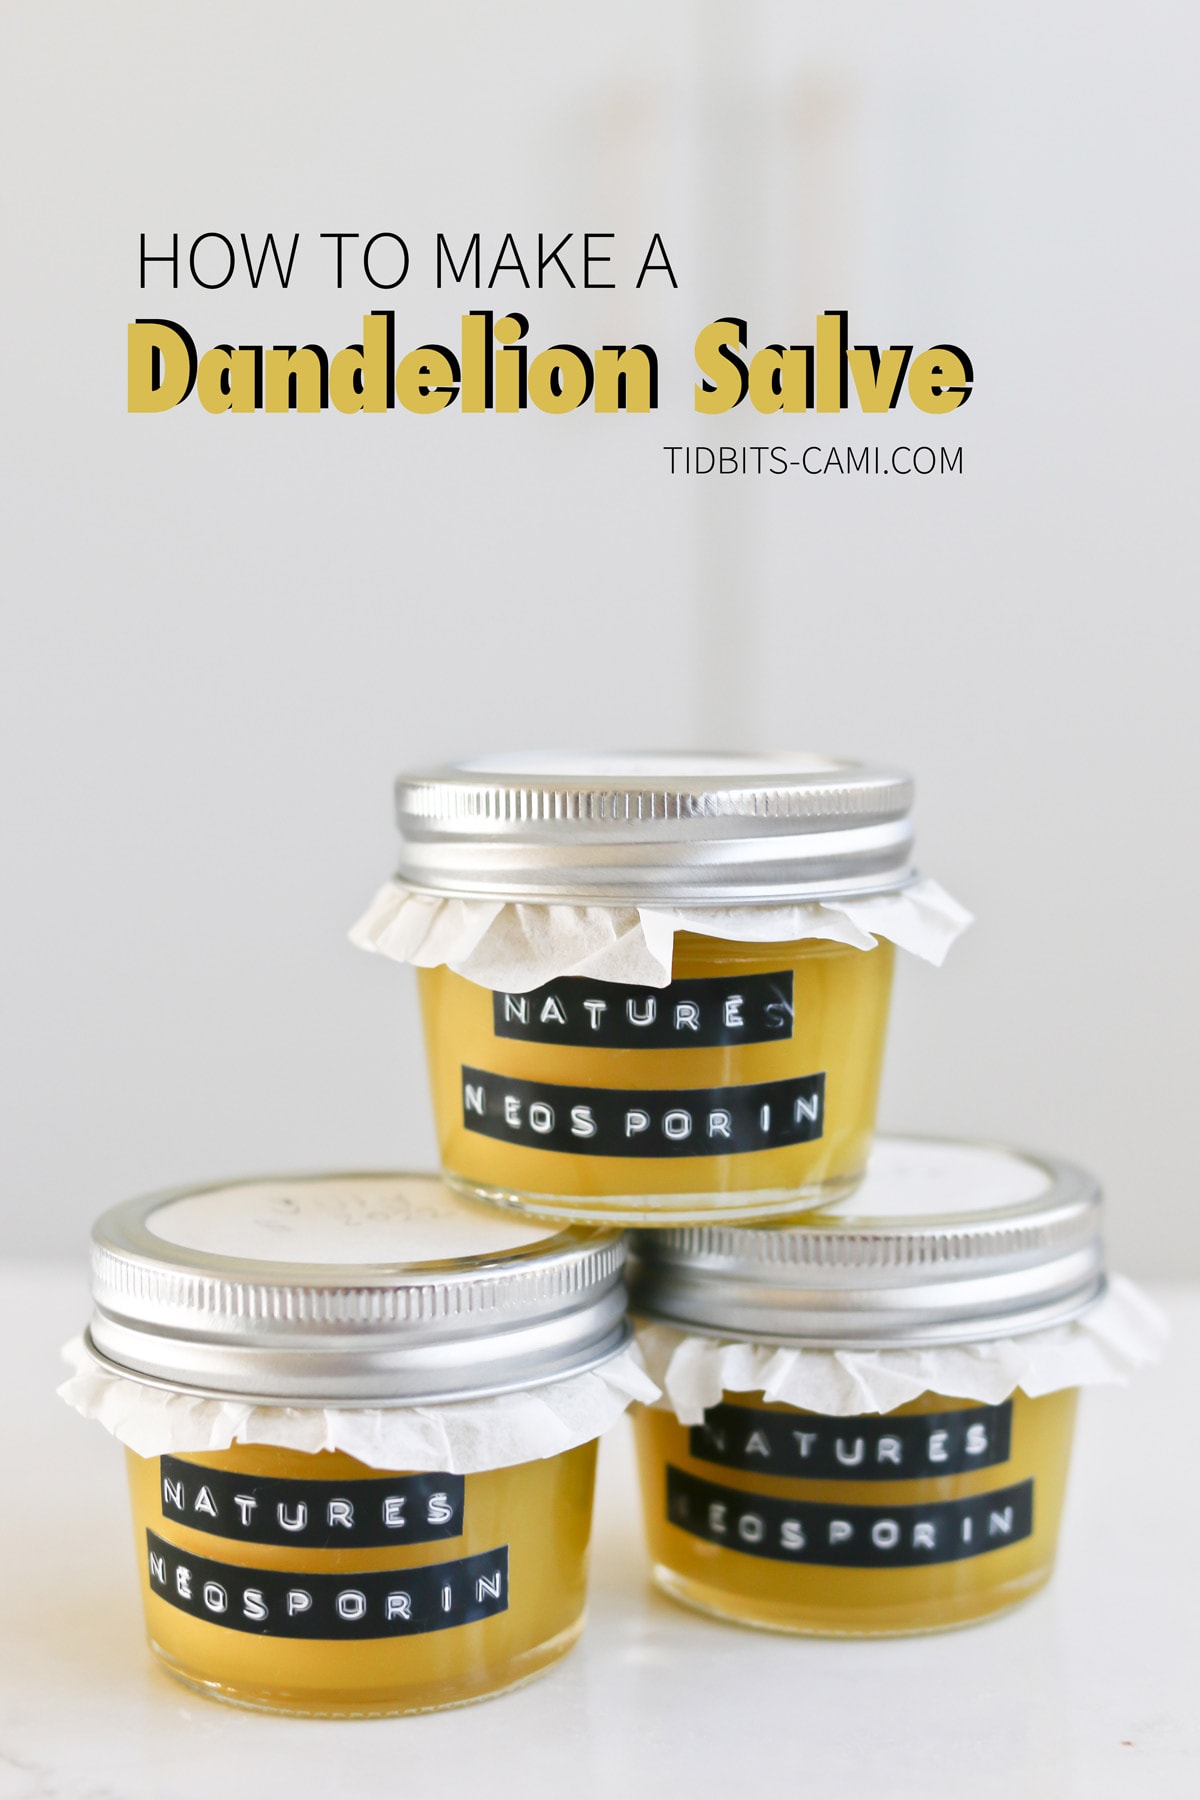 How to make a healing dandelion salve